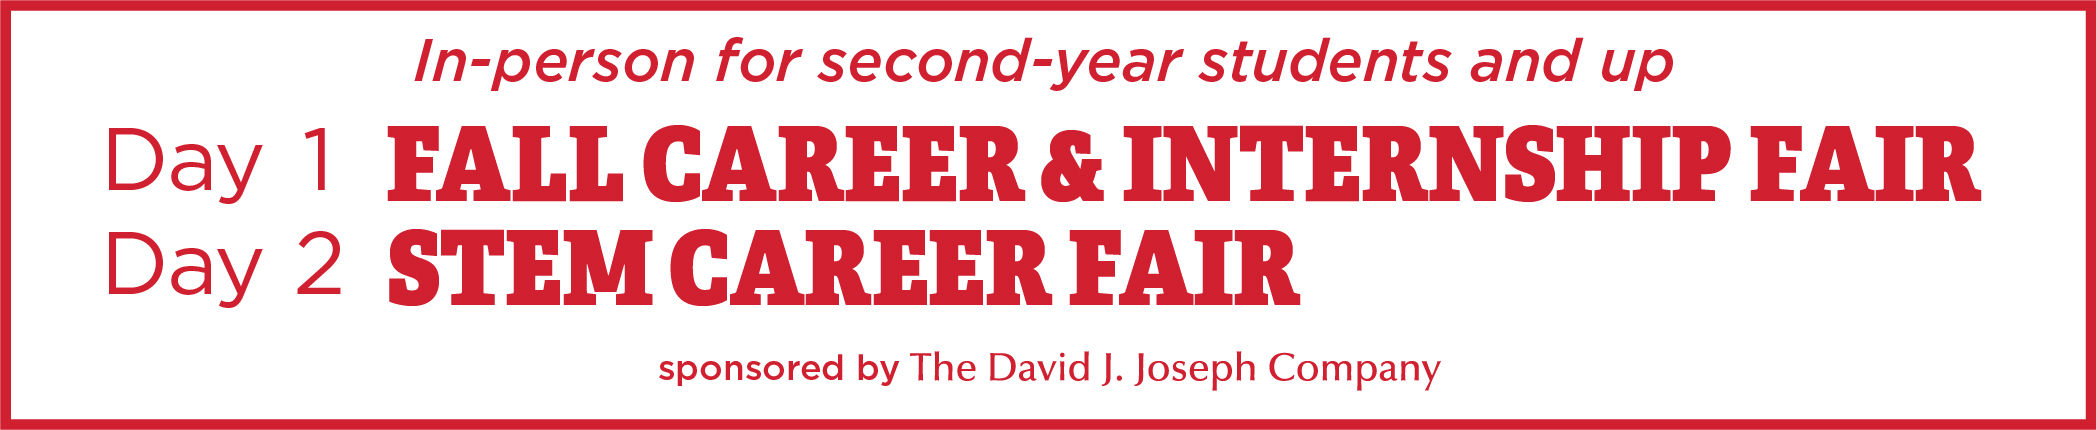 In Person Fall Career &amp; Internship Fair featuring STEM Career Fair sponsored by the David J. Joseph Company